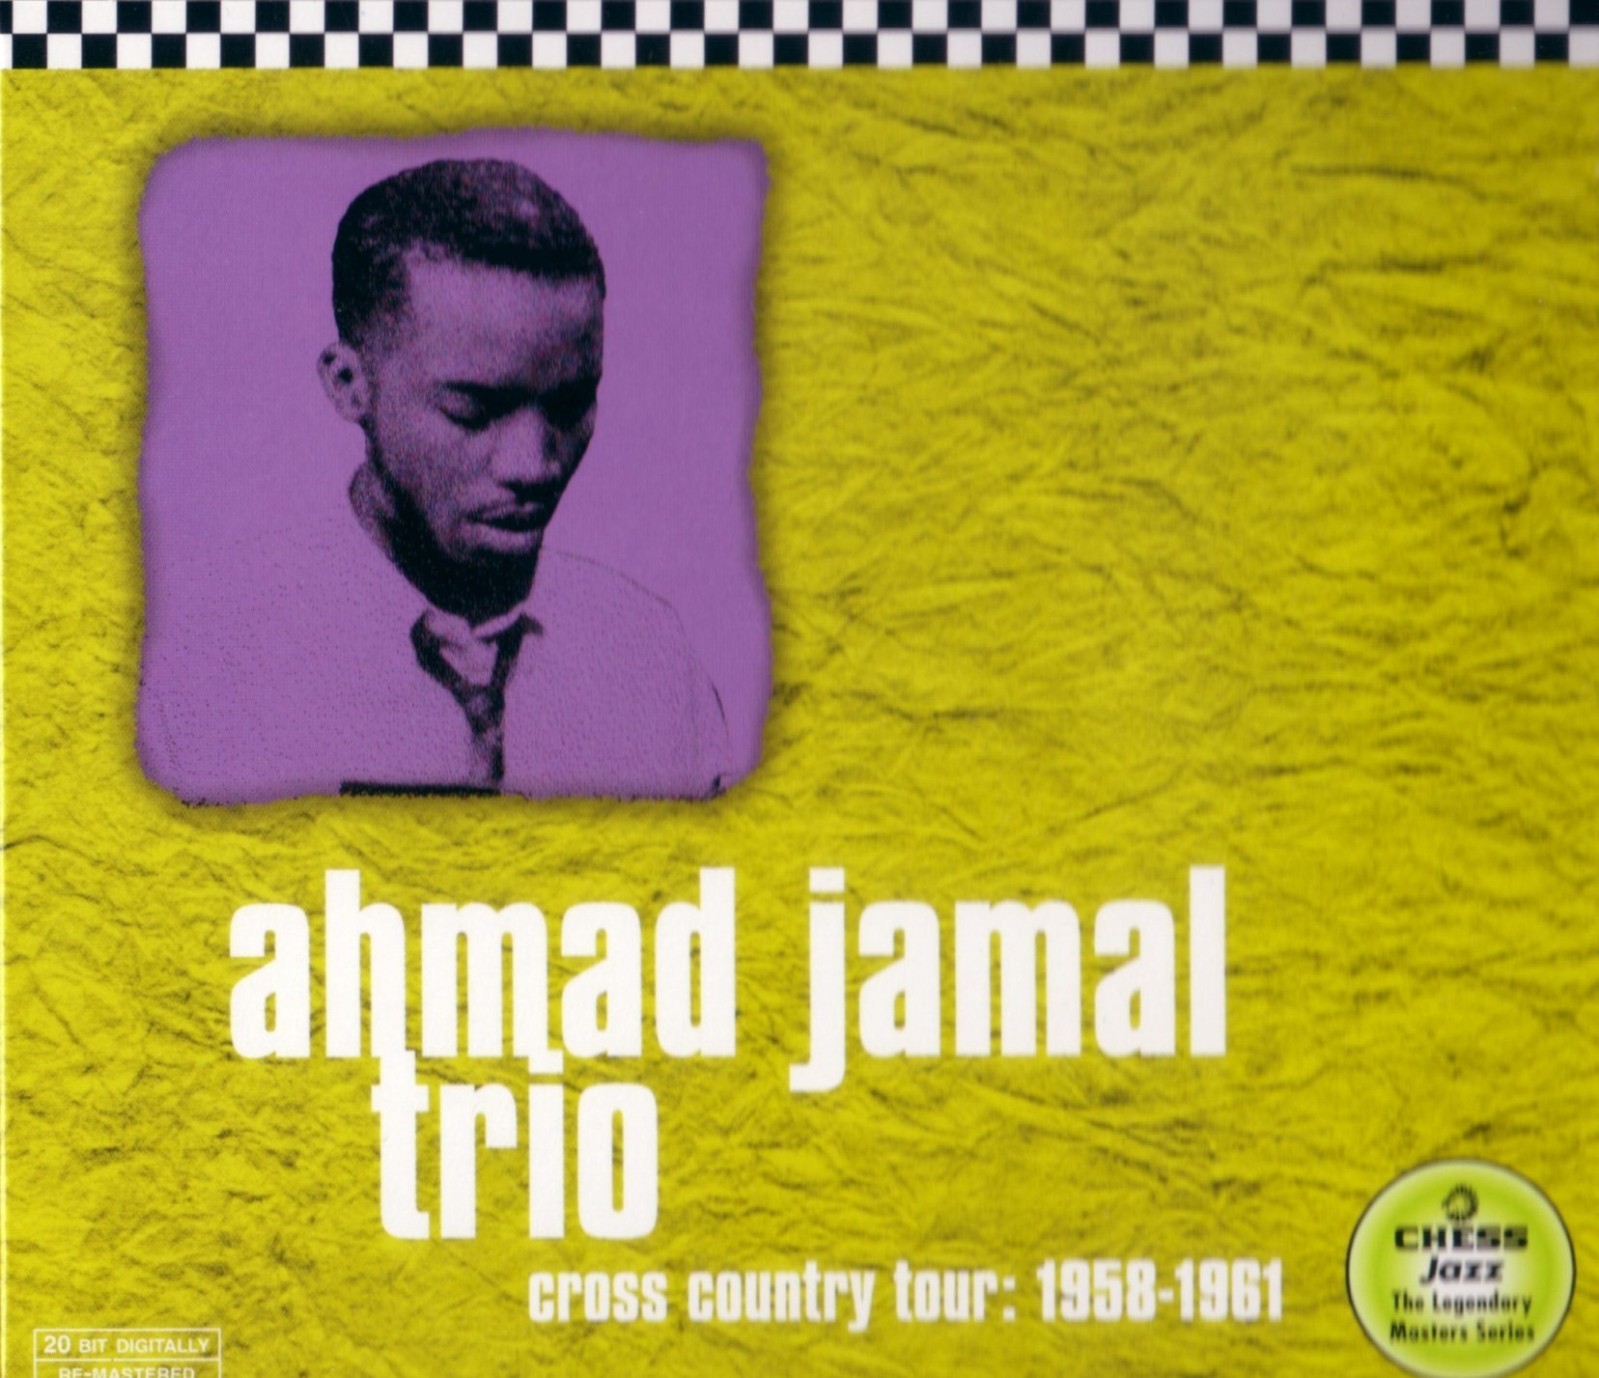 AHMAD JAMAL - Cross Country Tour: 1958-1961 cover 